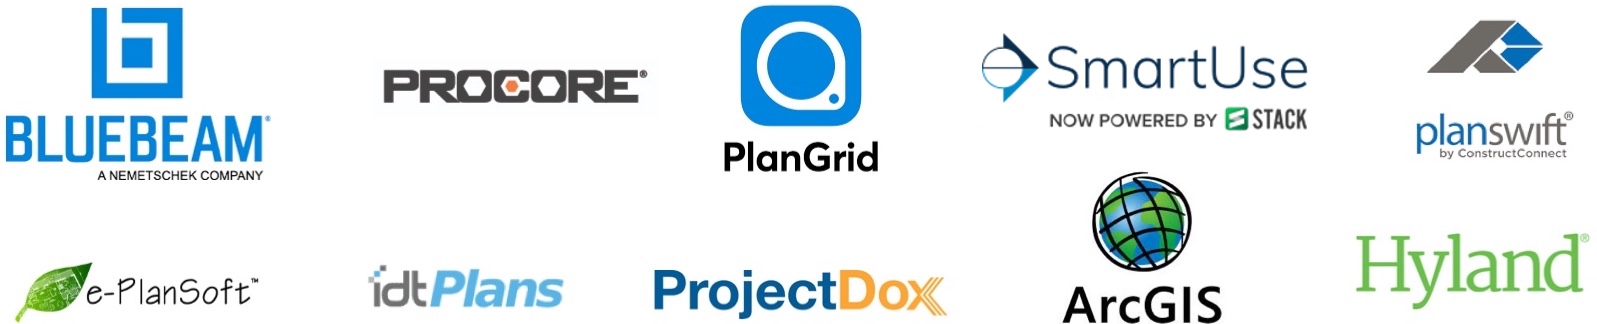 bluebeam procore plangrid smartuse stack planswift eplansoft idtplans project dox